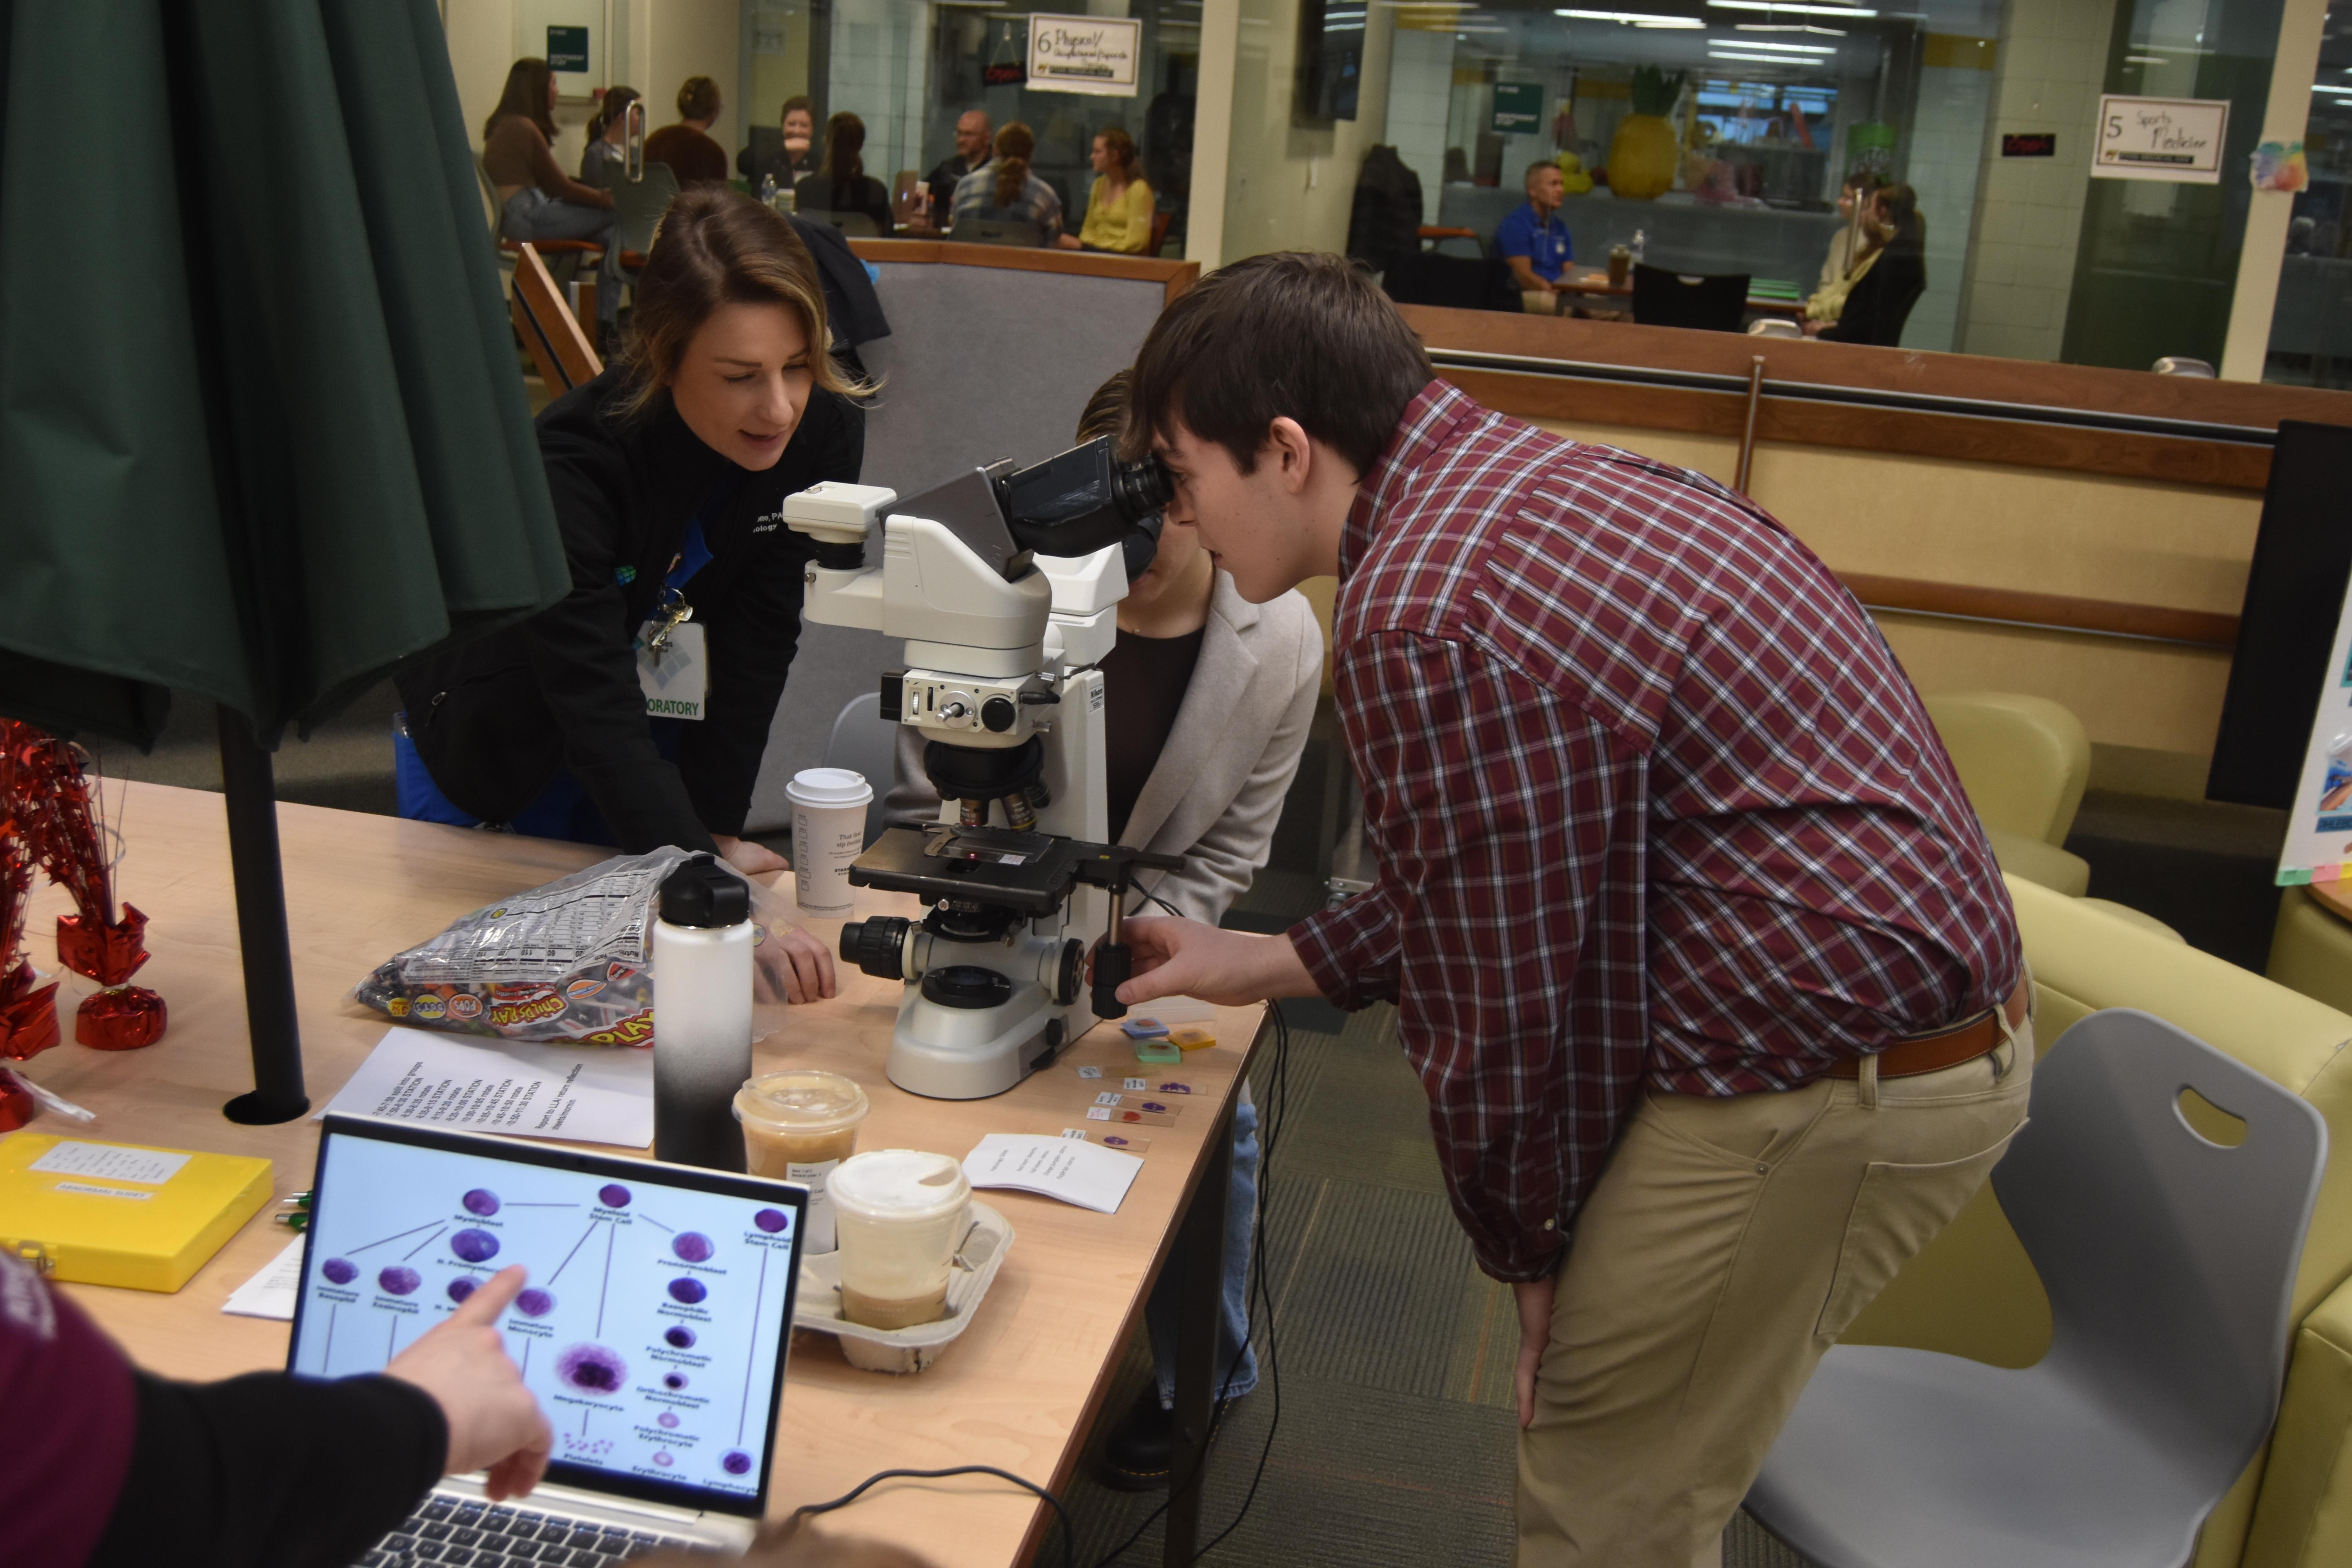 Pathologist Assistant Jennifer Stone explains the laboratory setting to student Zachary Burns